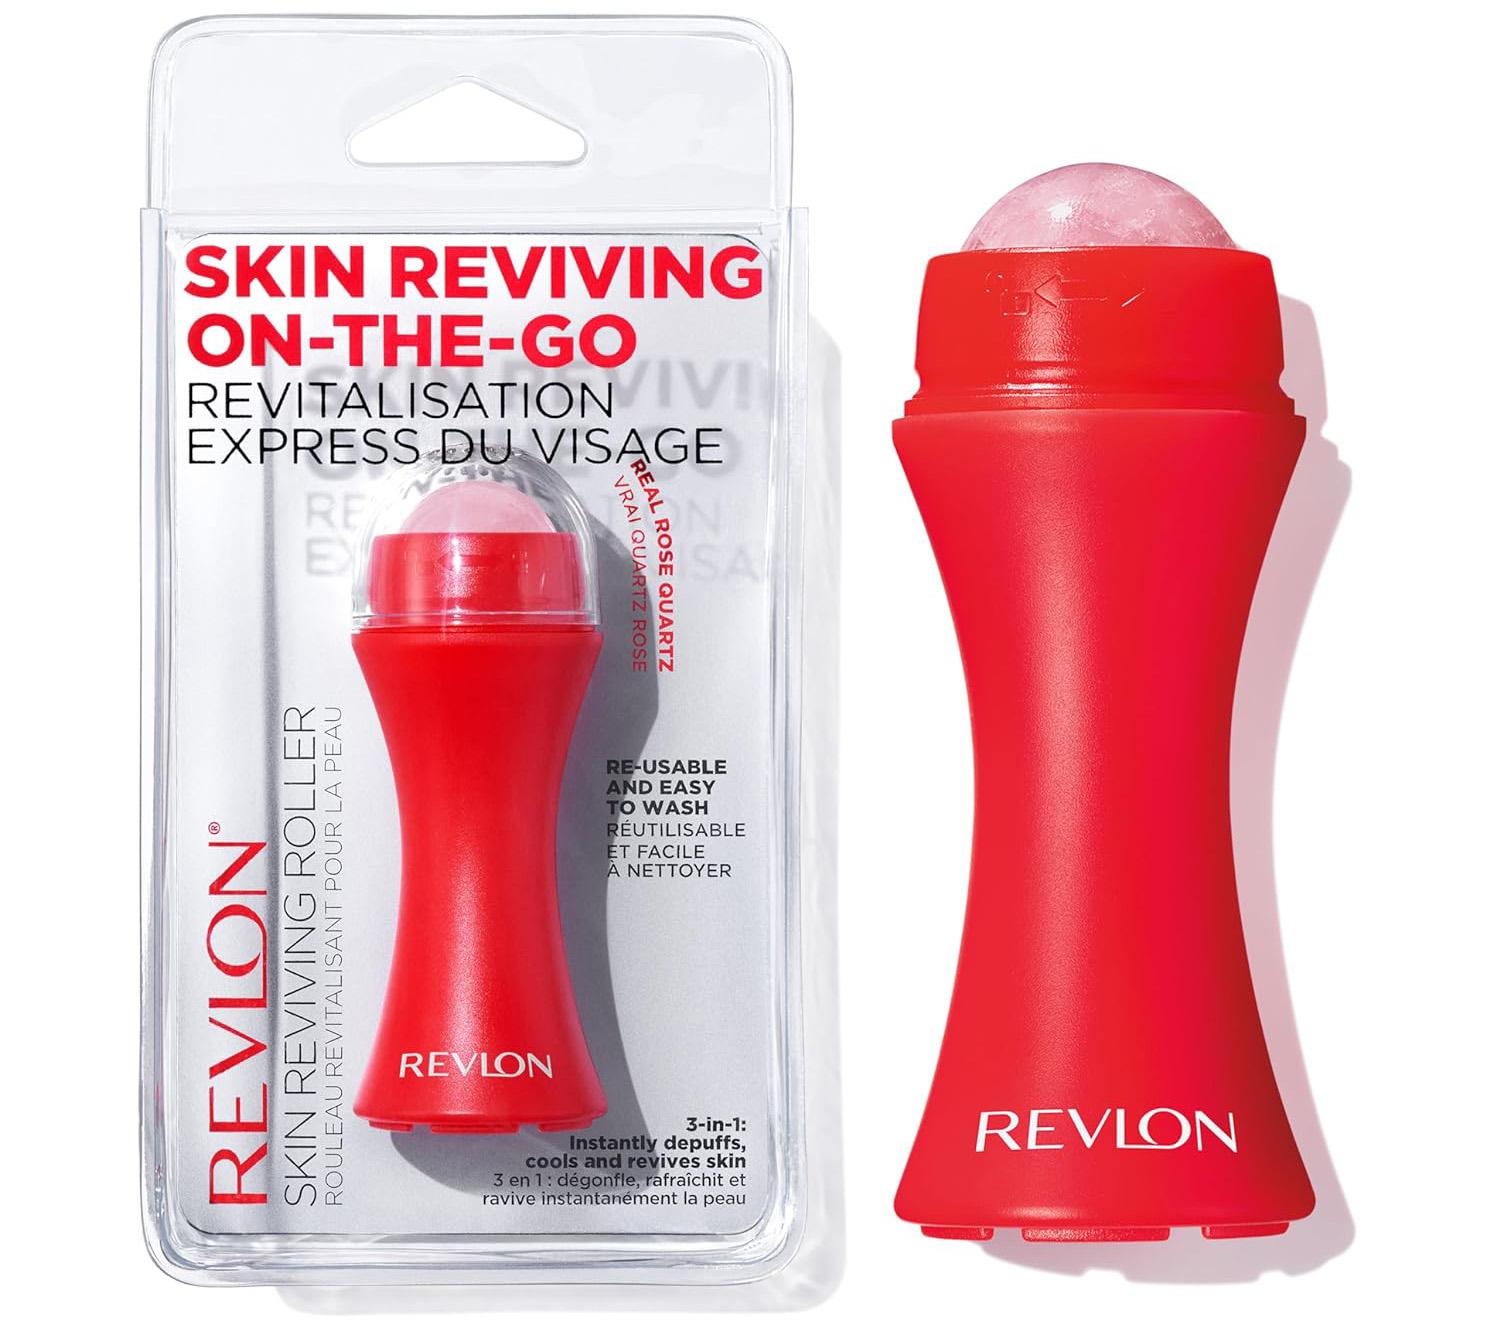 Revlon Facial Skin Reviving Roller with Rose Quartz for $4.84